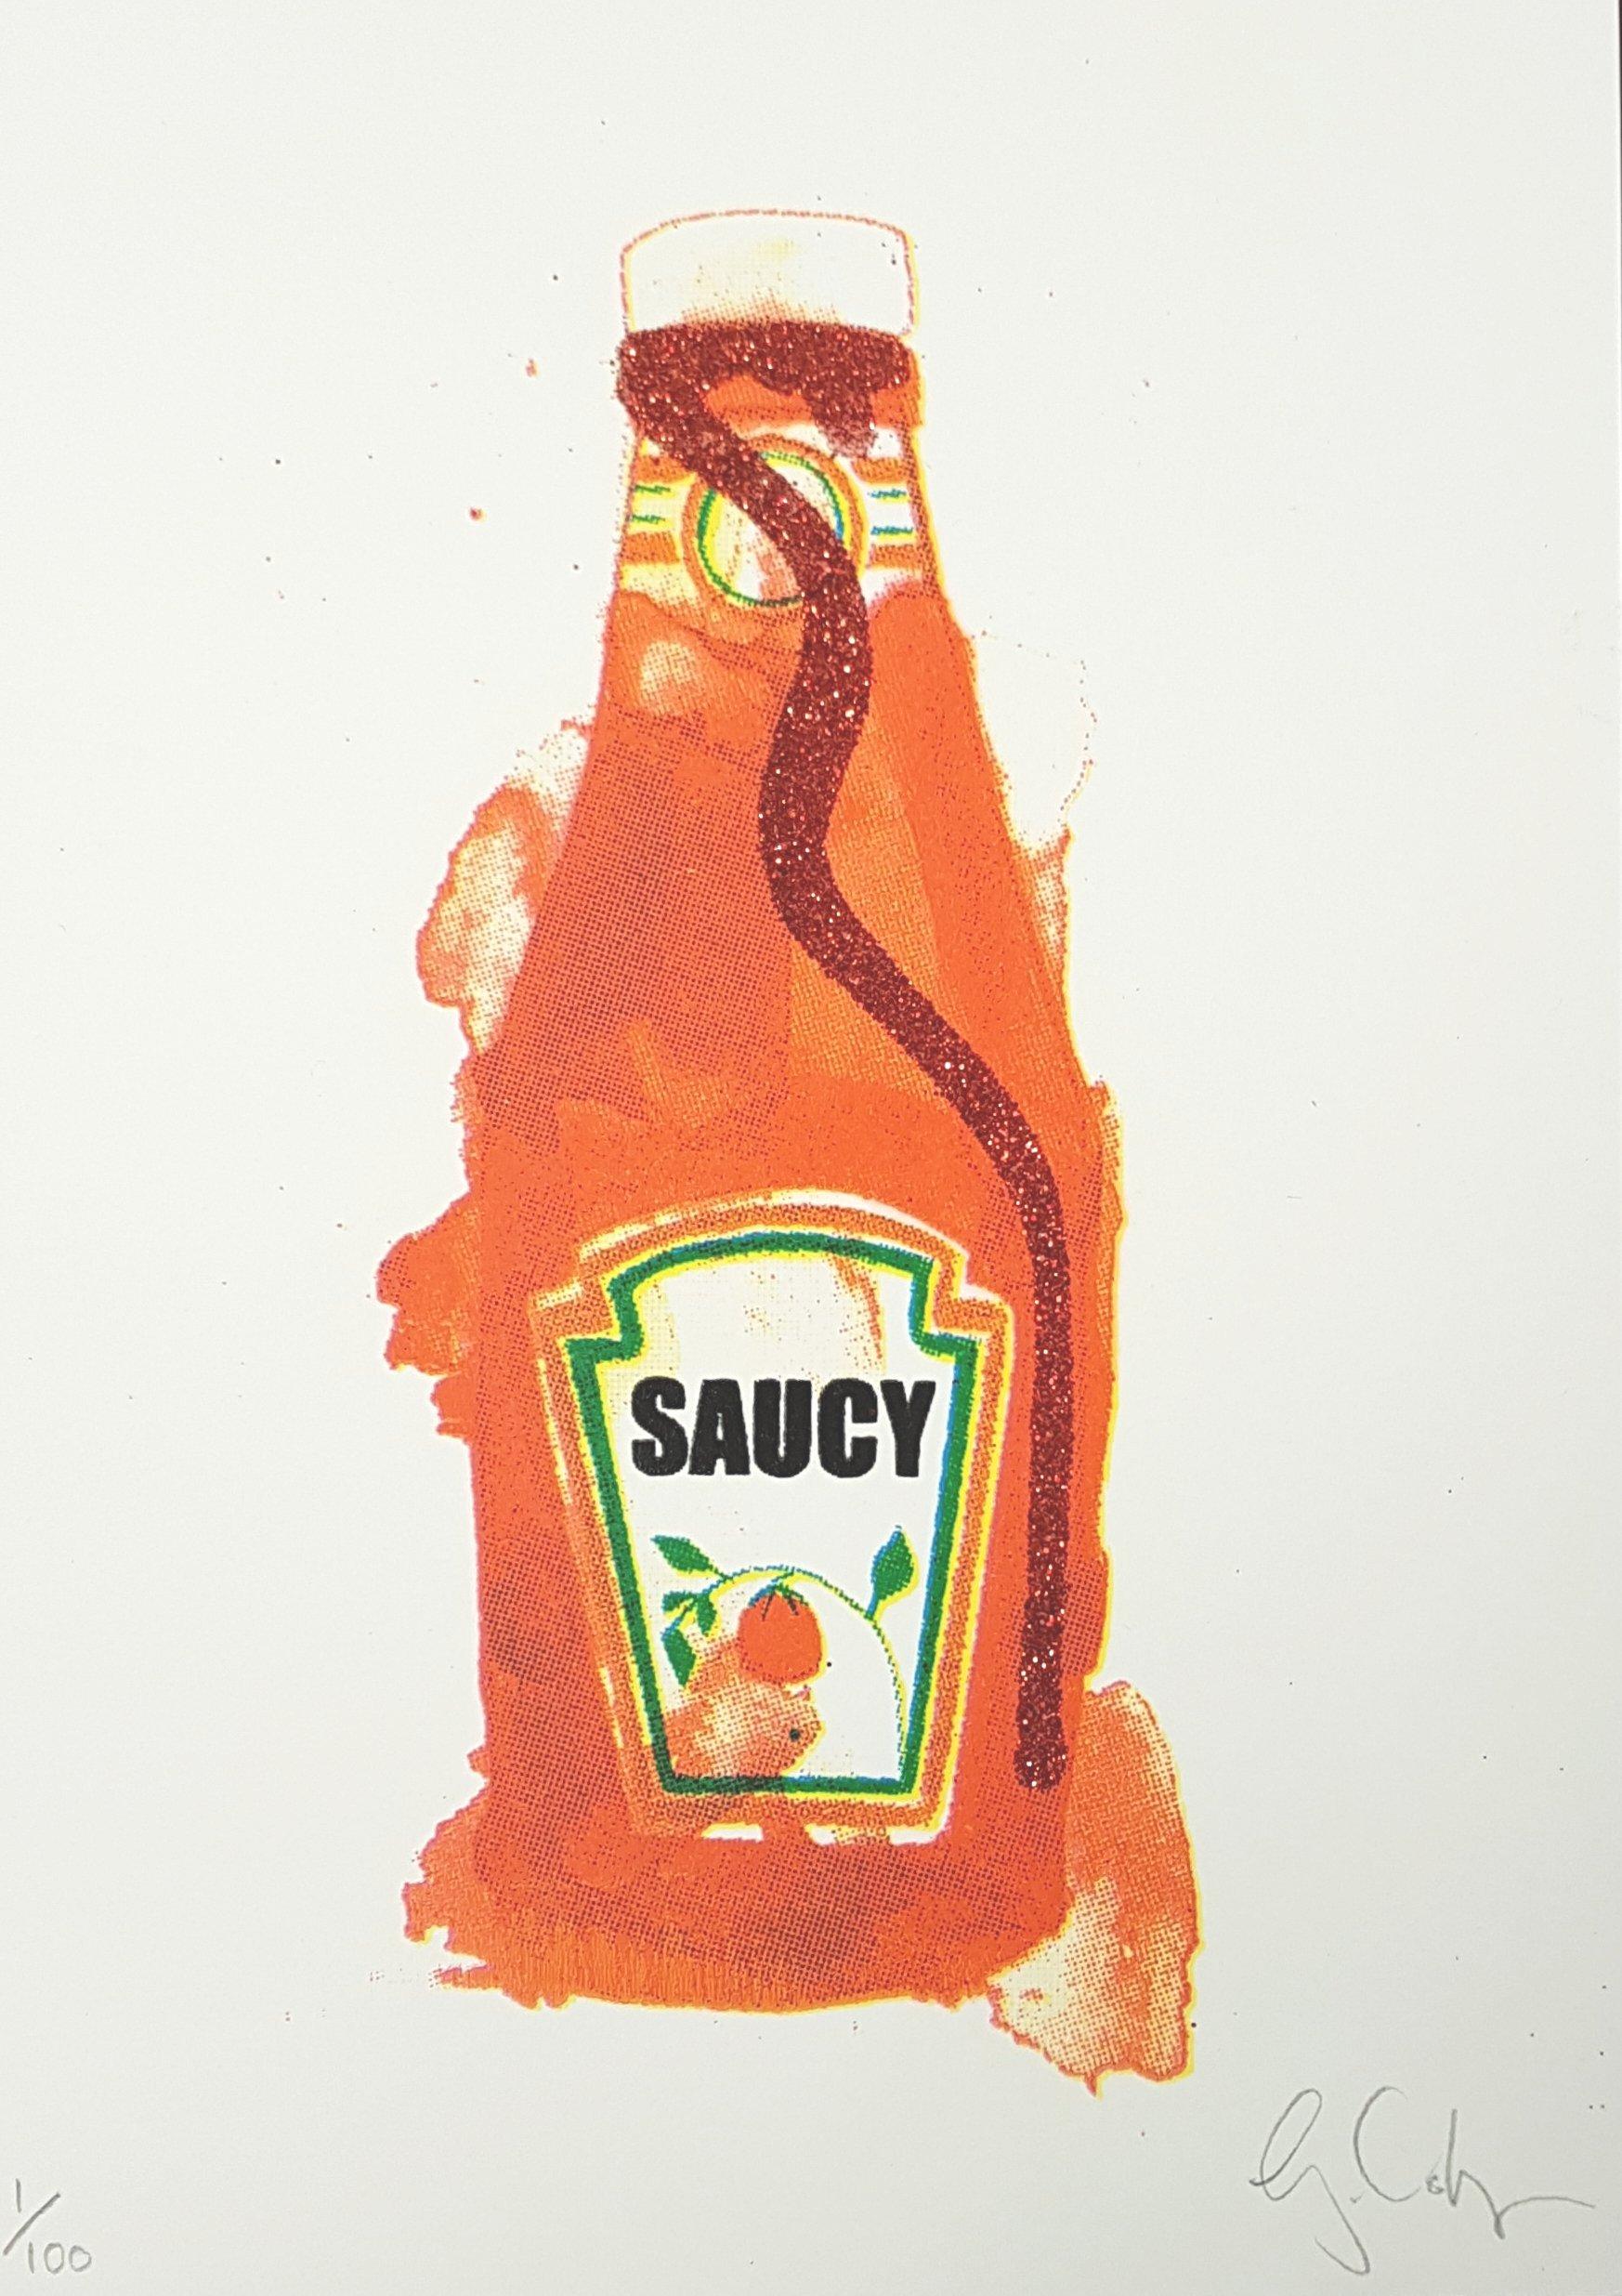 Mini diptyque « Saucy and Use Me » (Savoir et utiliser moi) - Print de Gavin Dobson